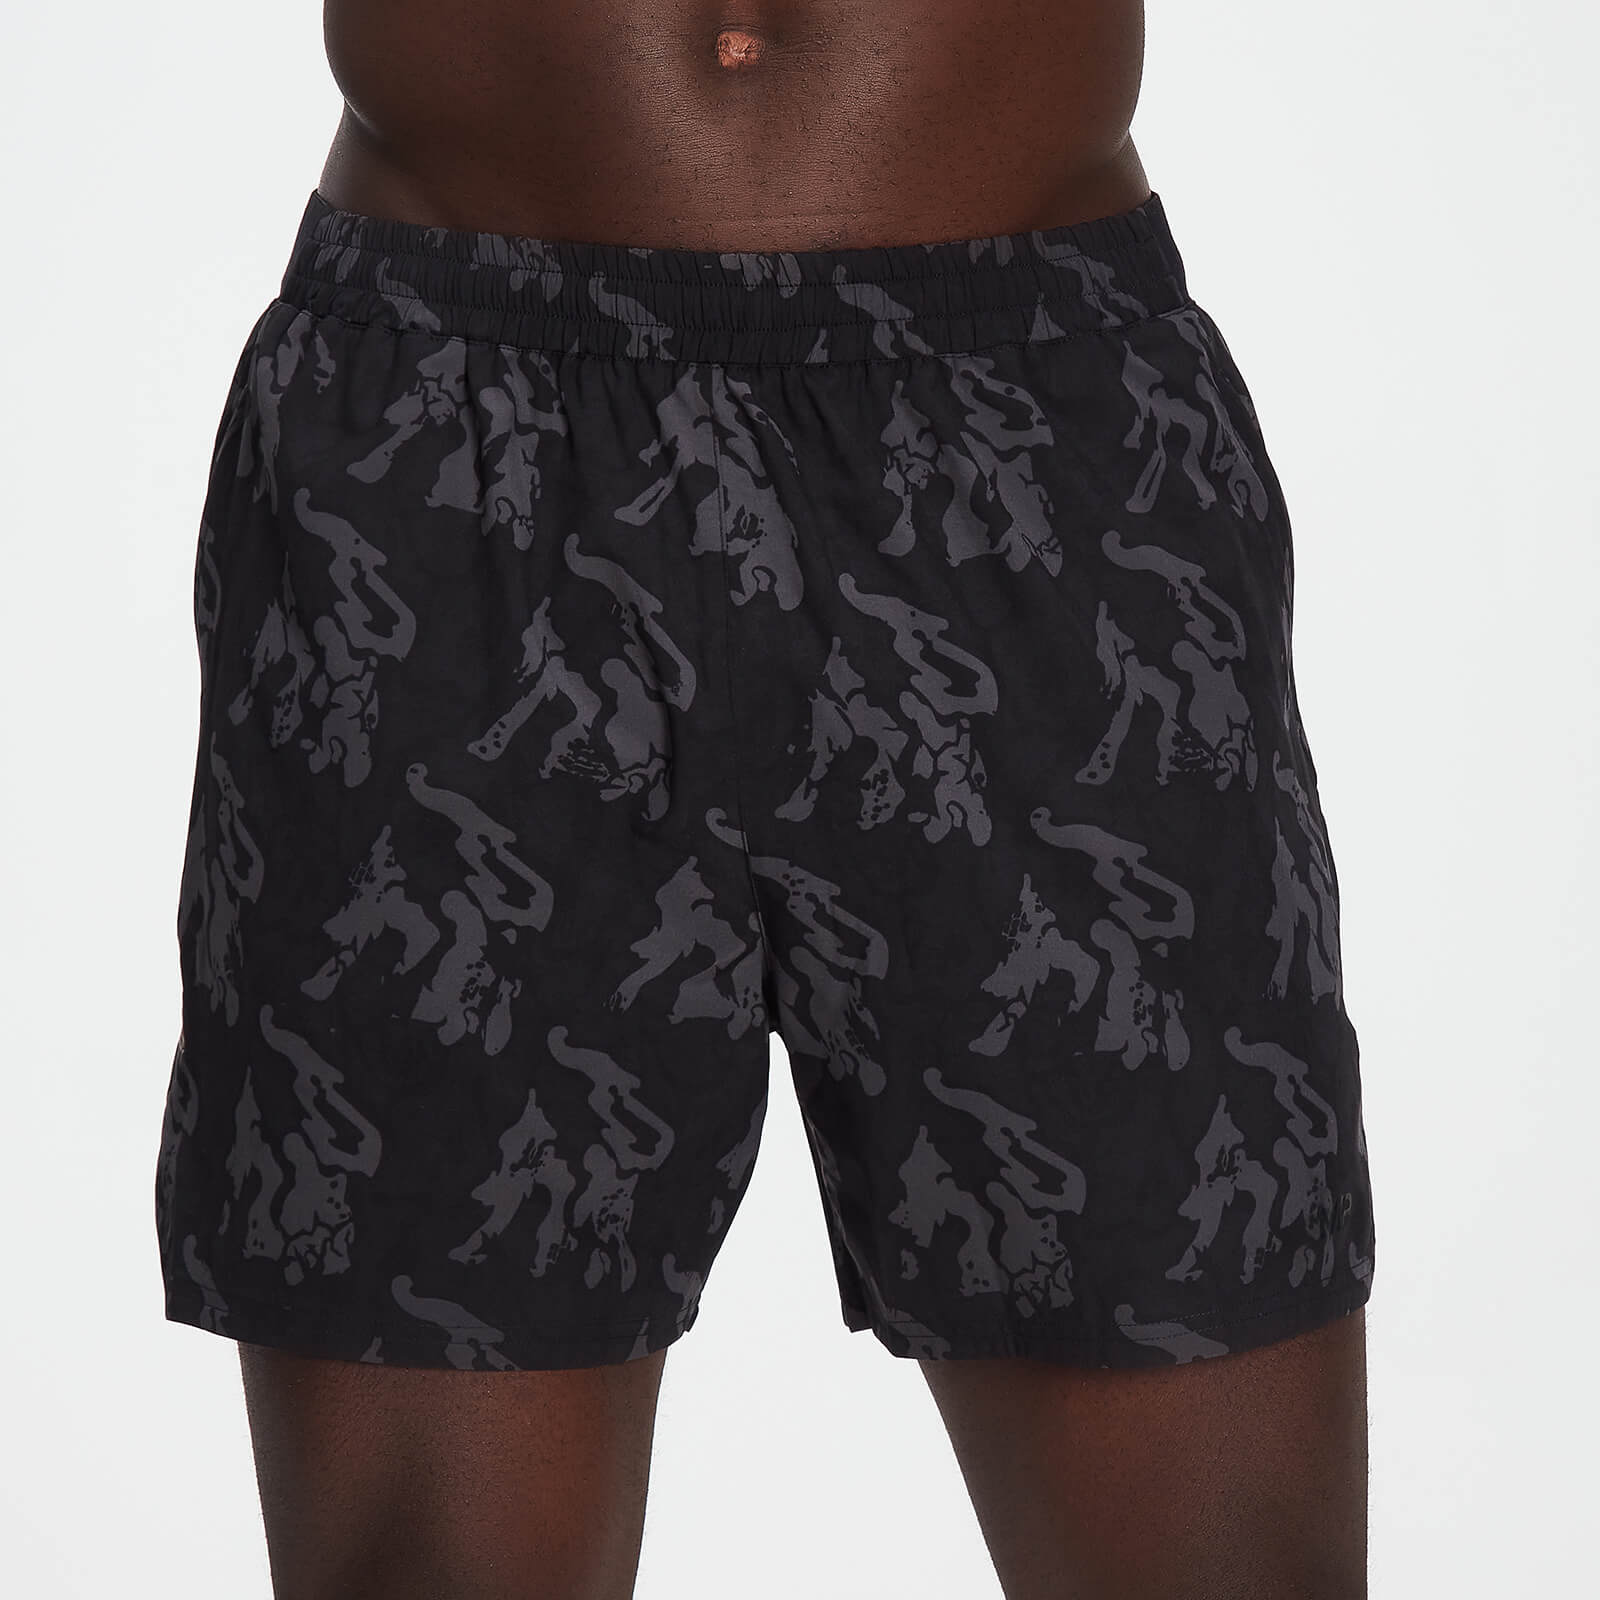 Pantalones cortos de camuflaje Adapt para hombre de MP - Camuflaje negro - XS